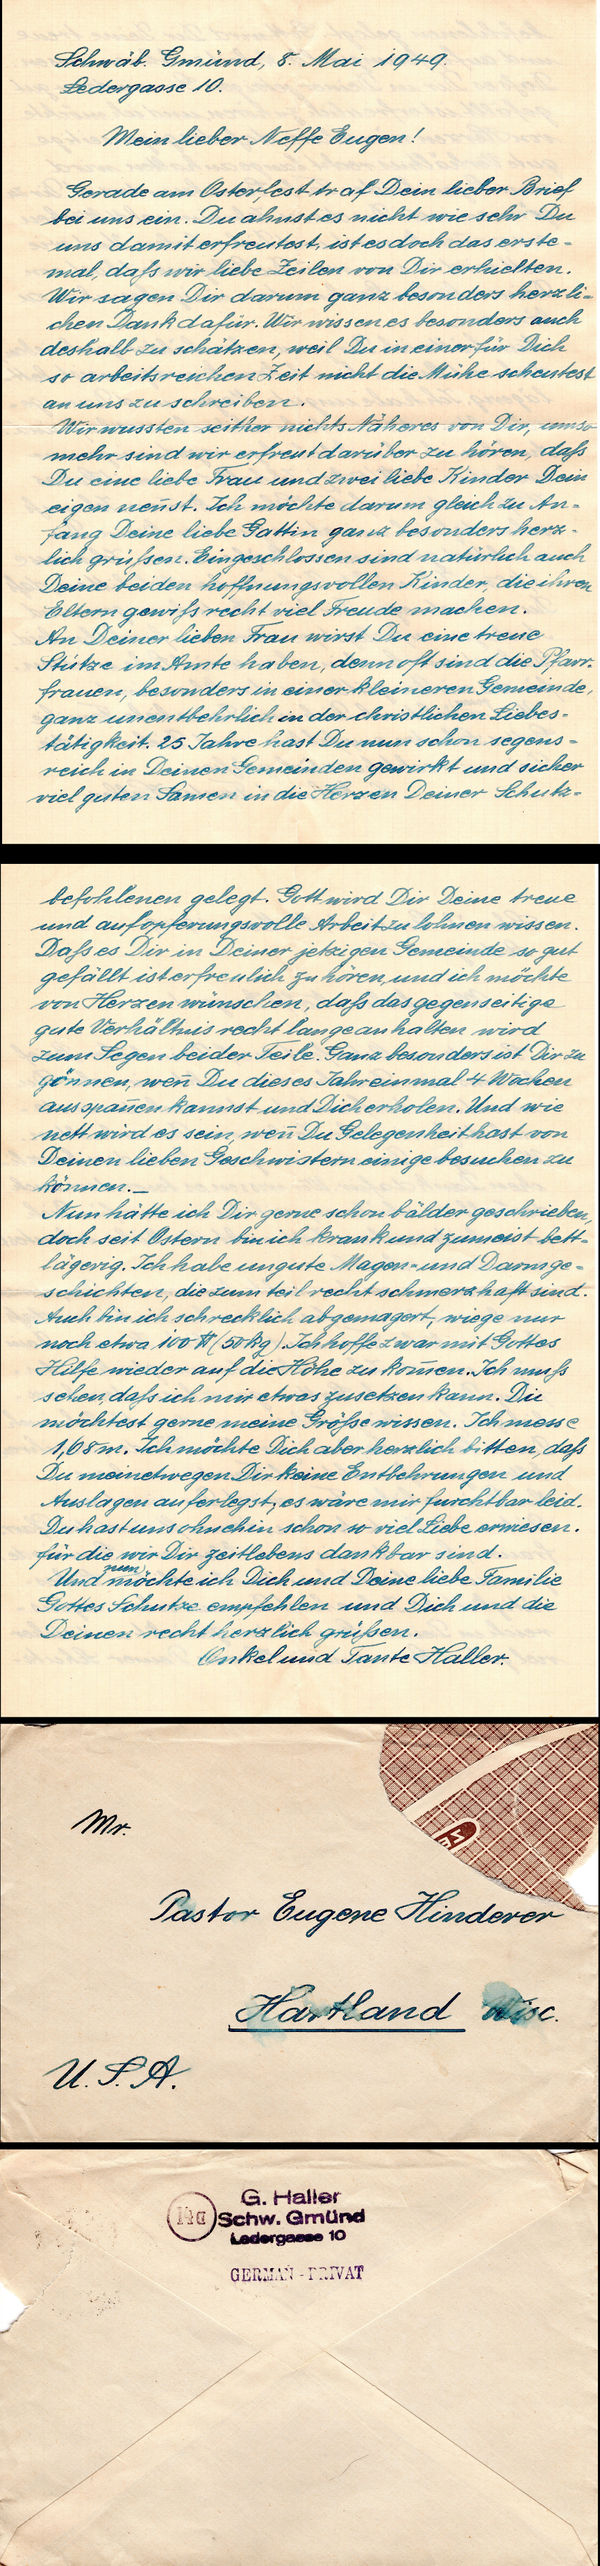 1949 - 05 08 letter to Eugene Hinderer from Haller.jpg